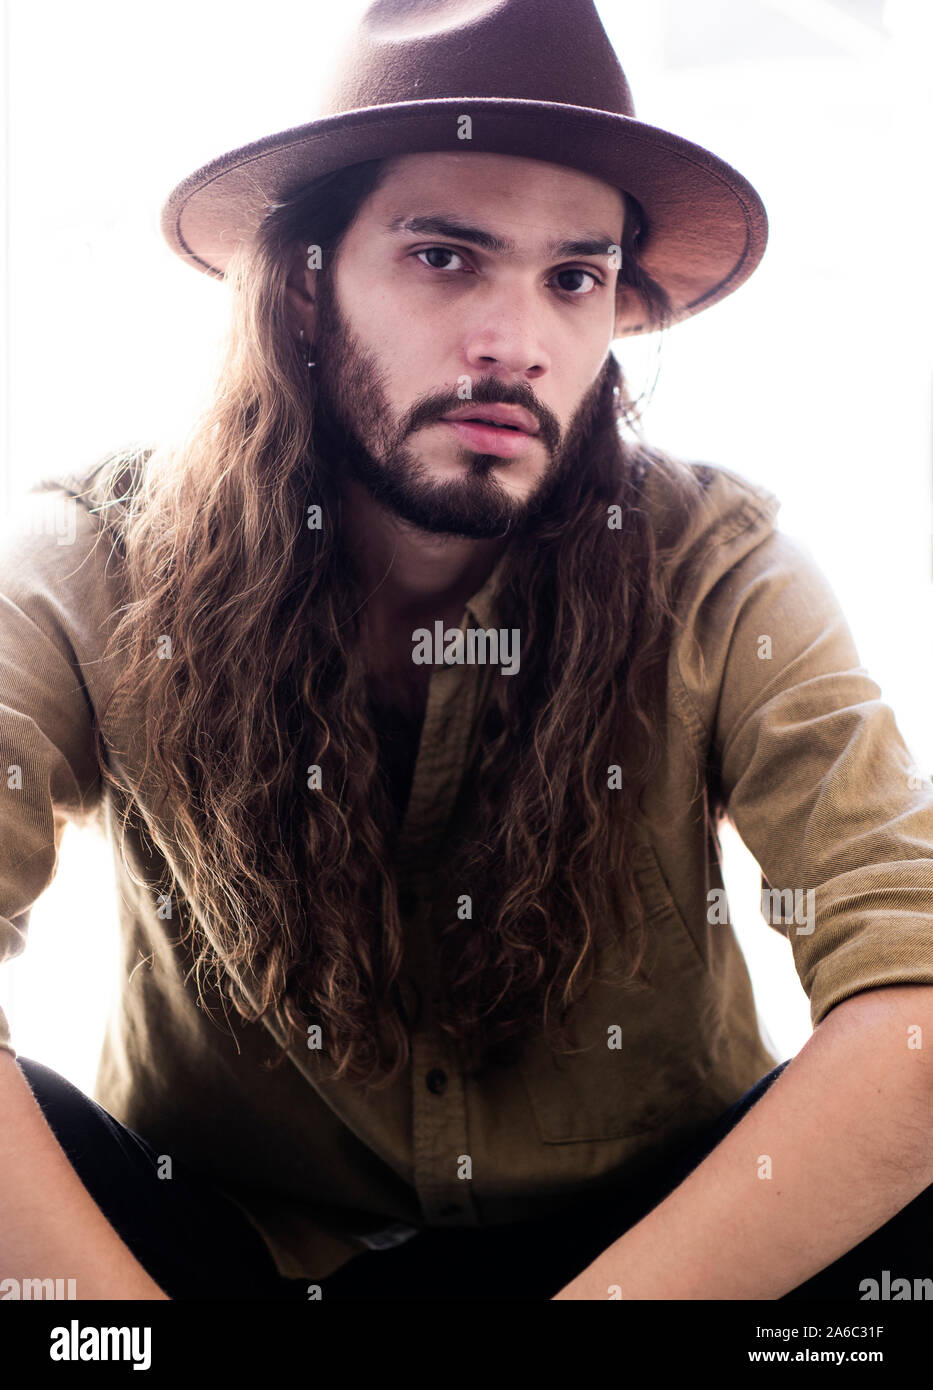 Hispanic man wearing cowboy hat hi-res stock photography and images - Alamy